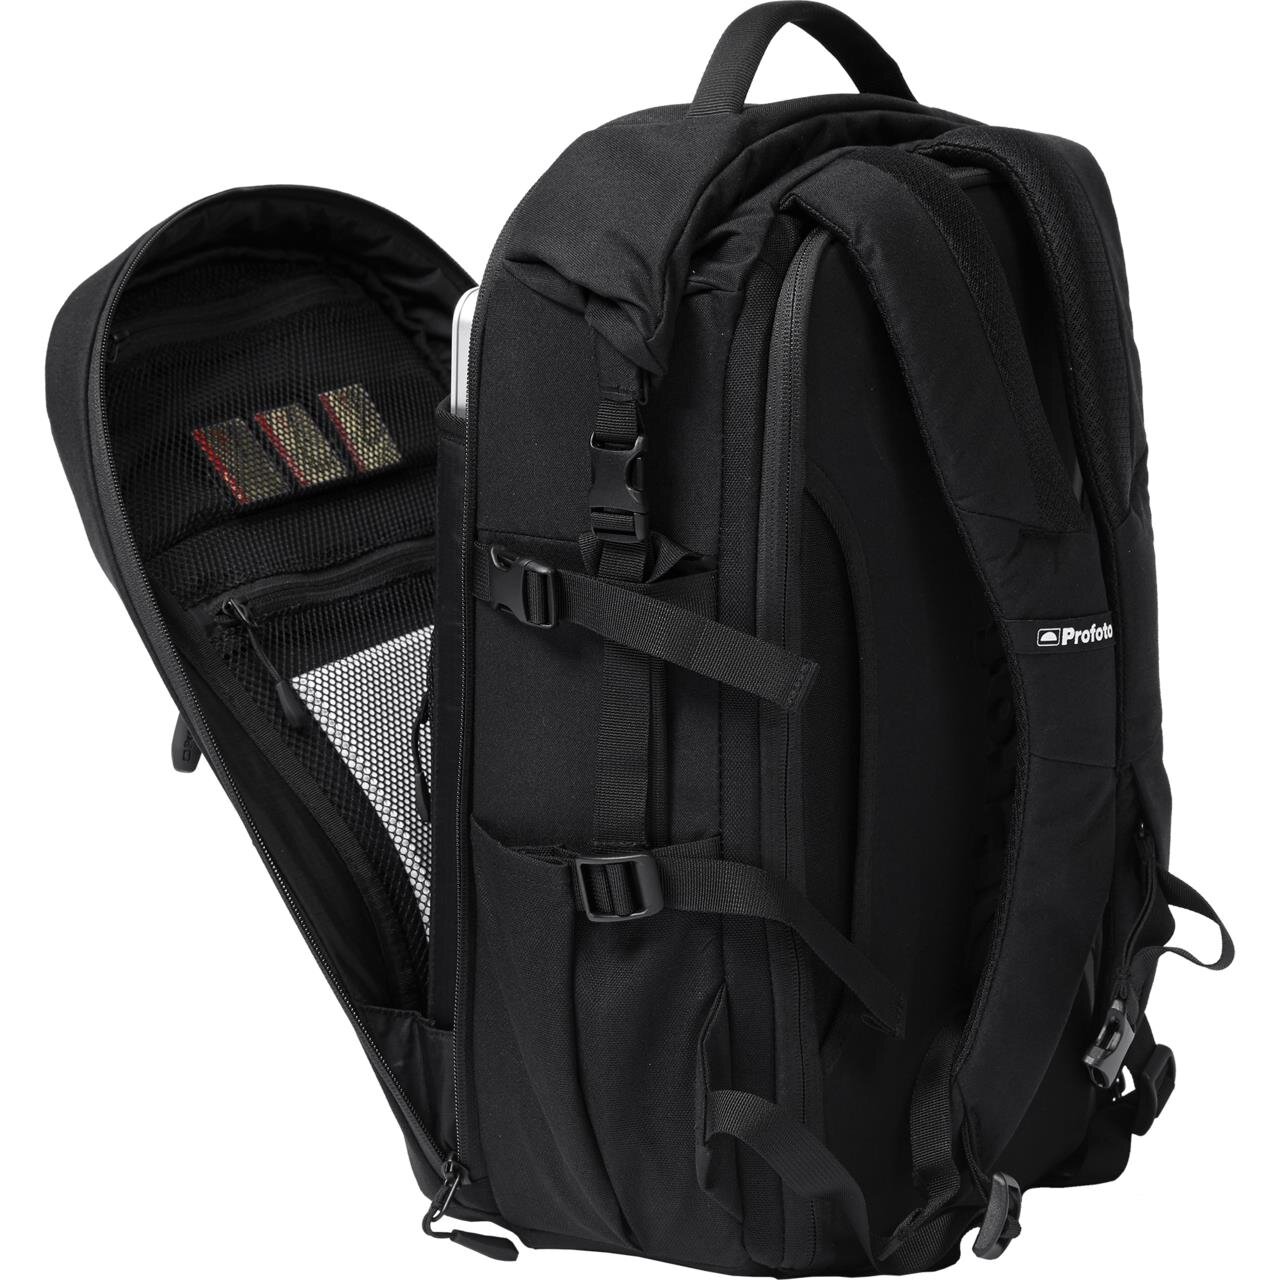 330241_i_profoto-core-backpack-s-pocket_productimage.png.jpeg